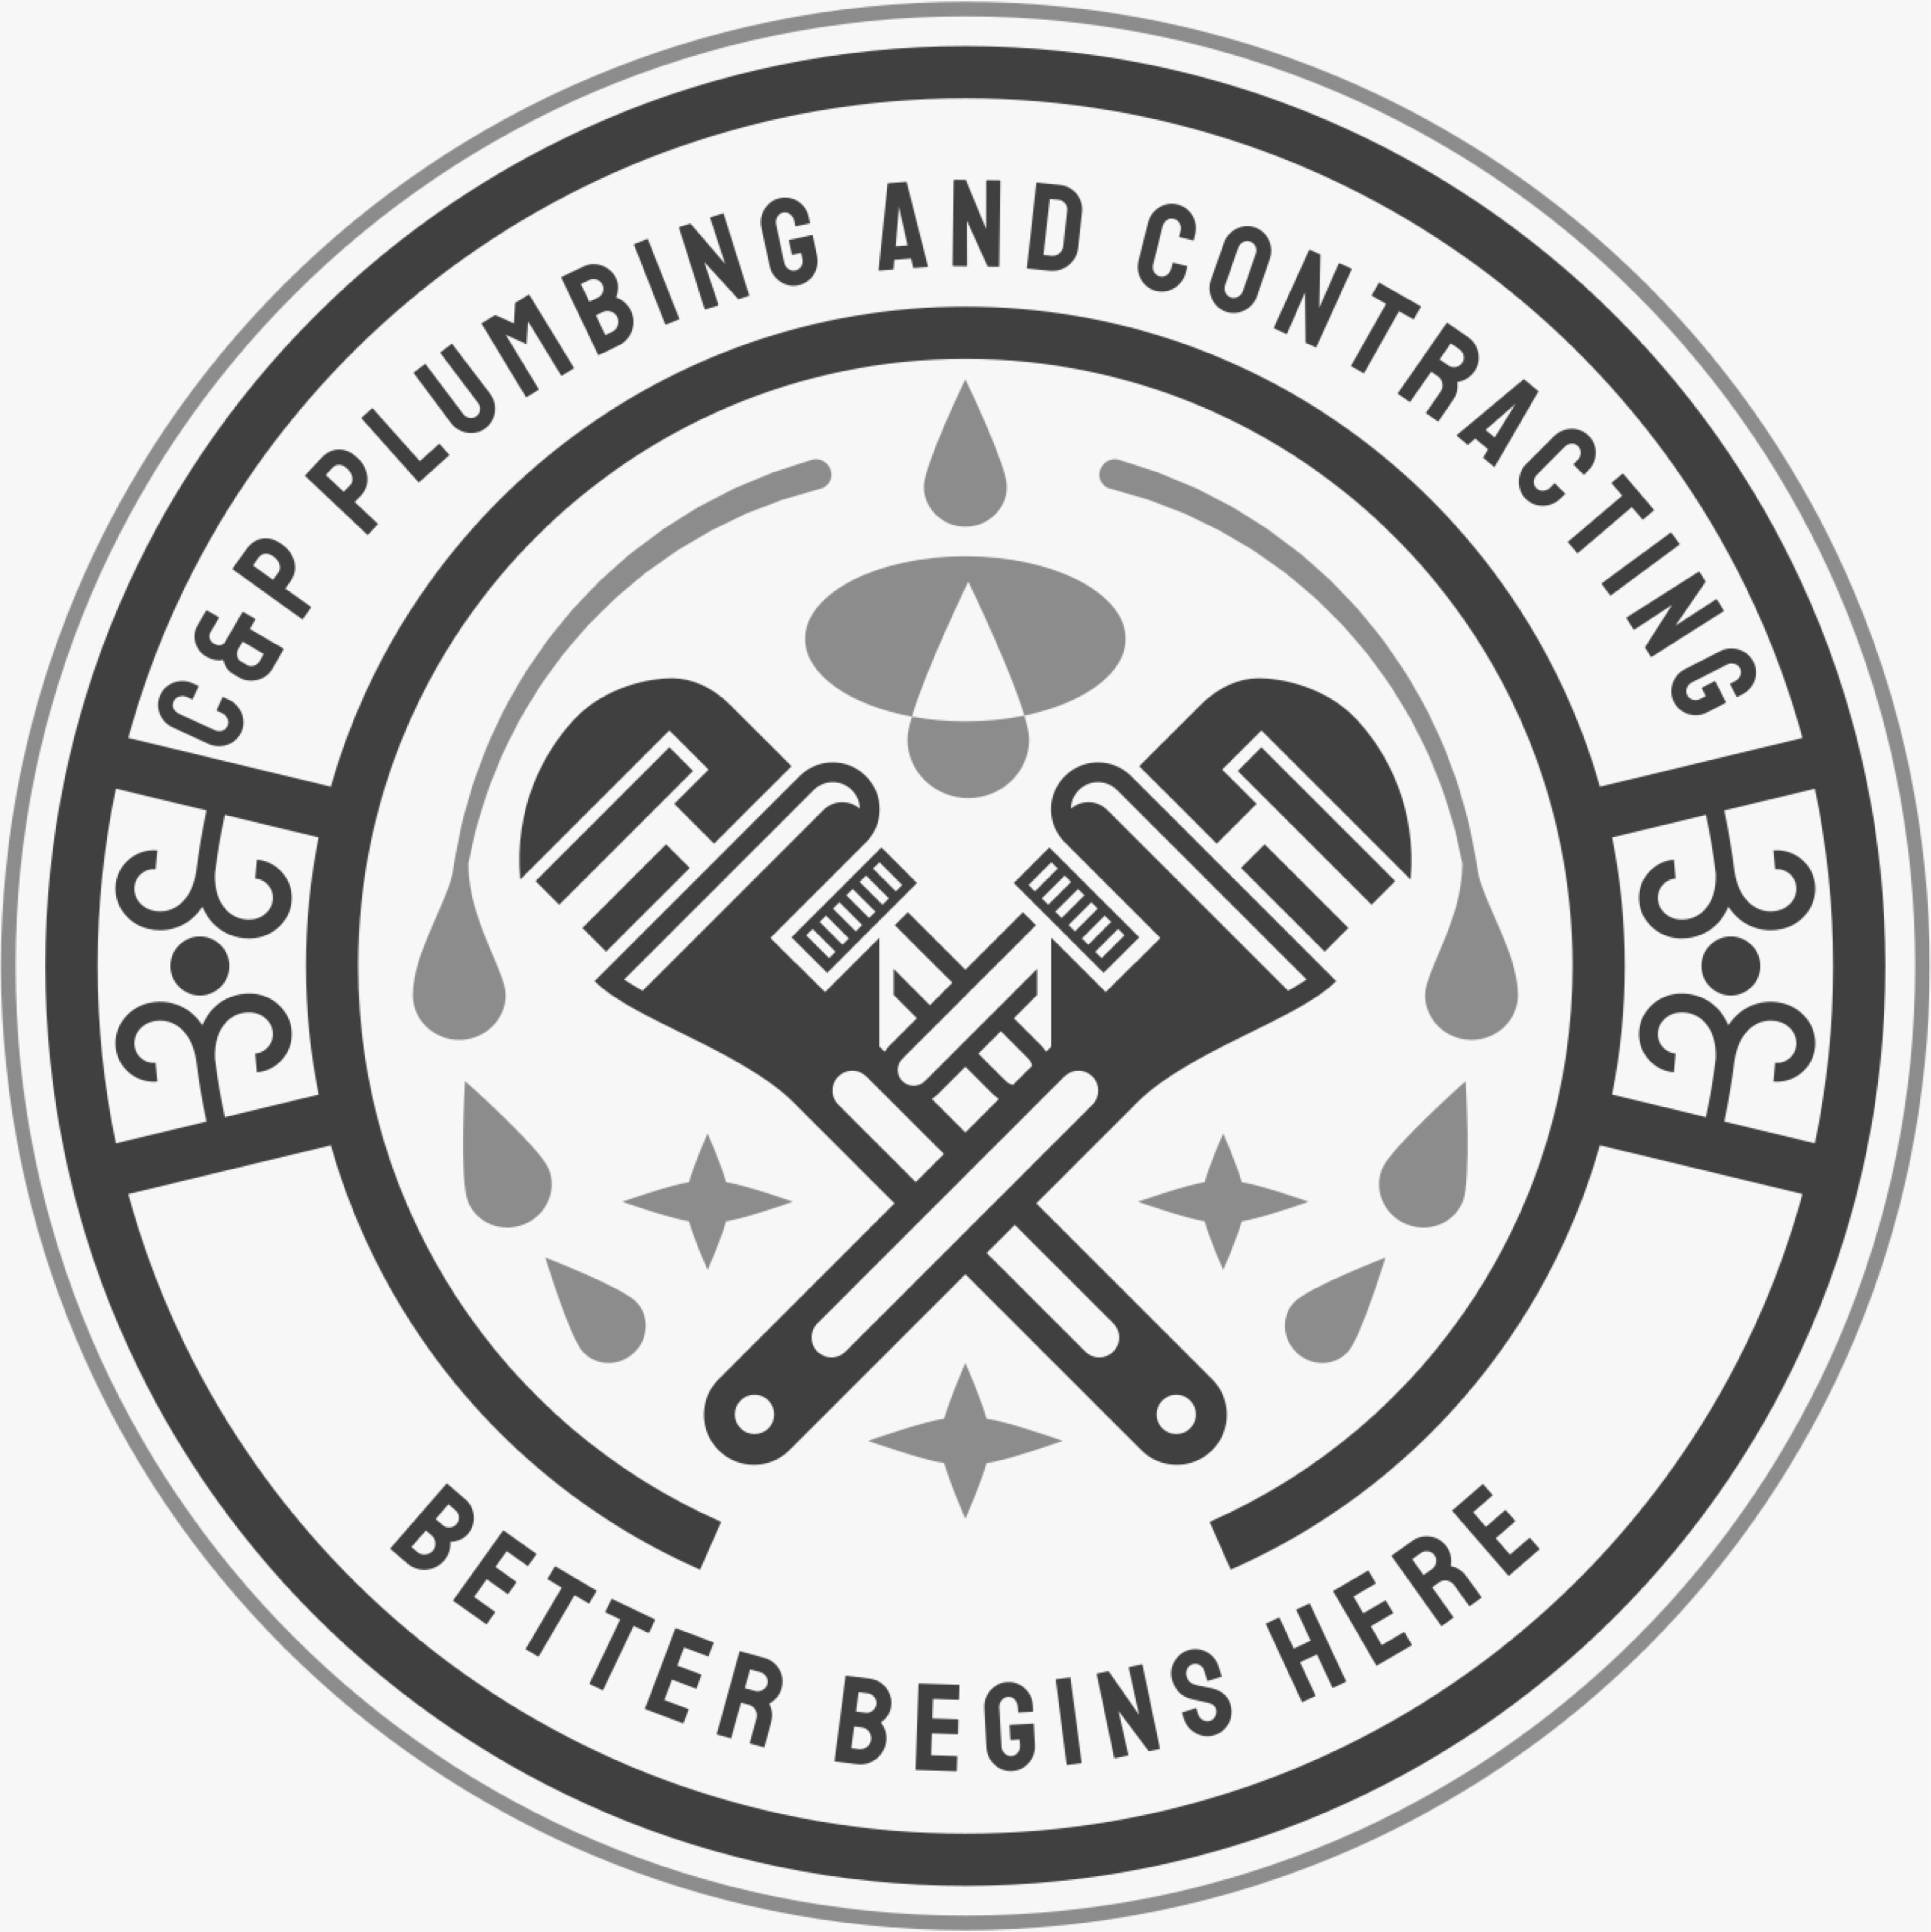 C & P Plumbing and Contracting Logo